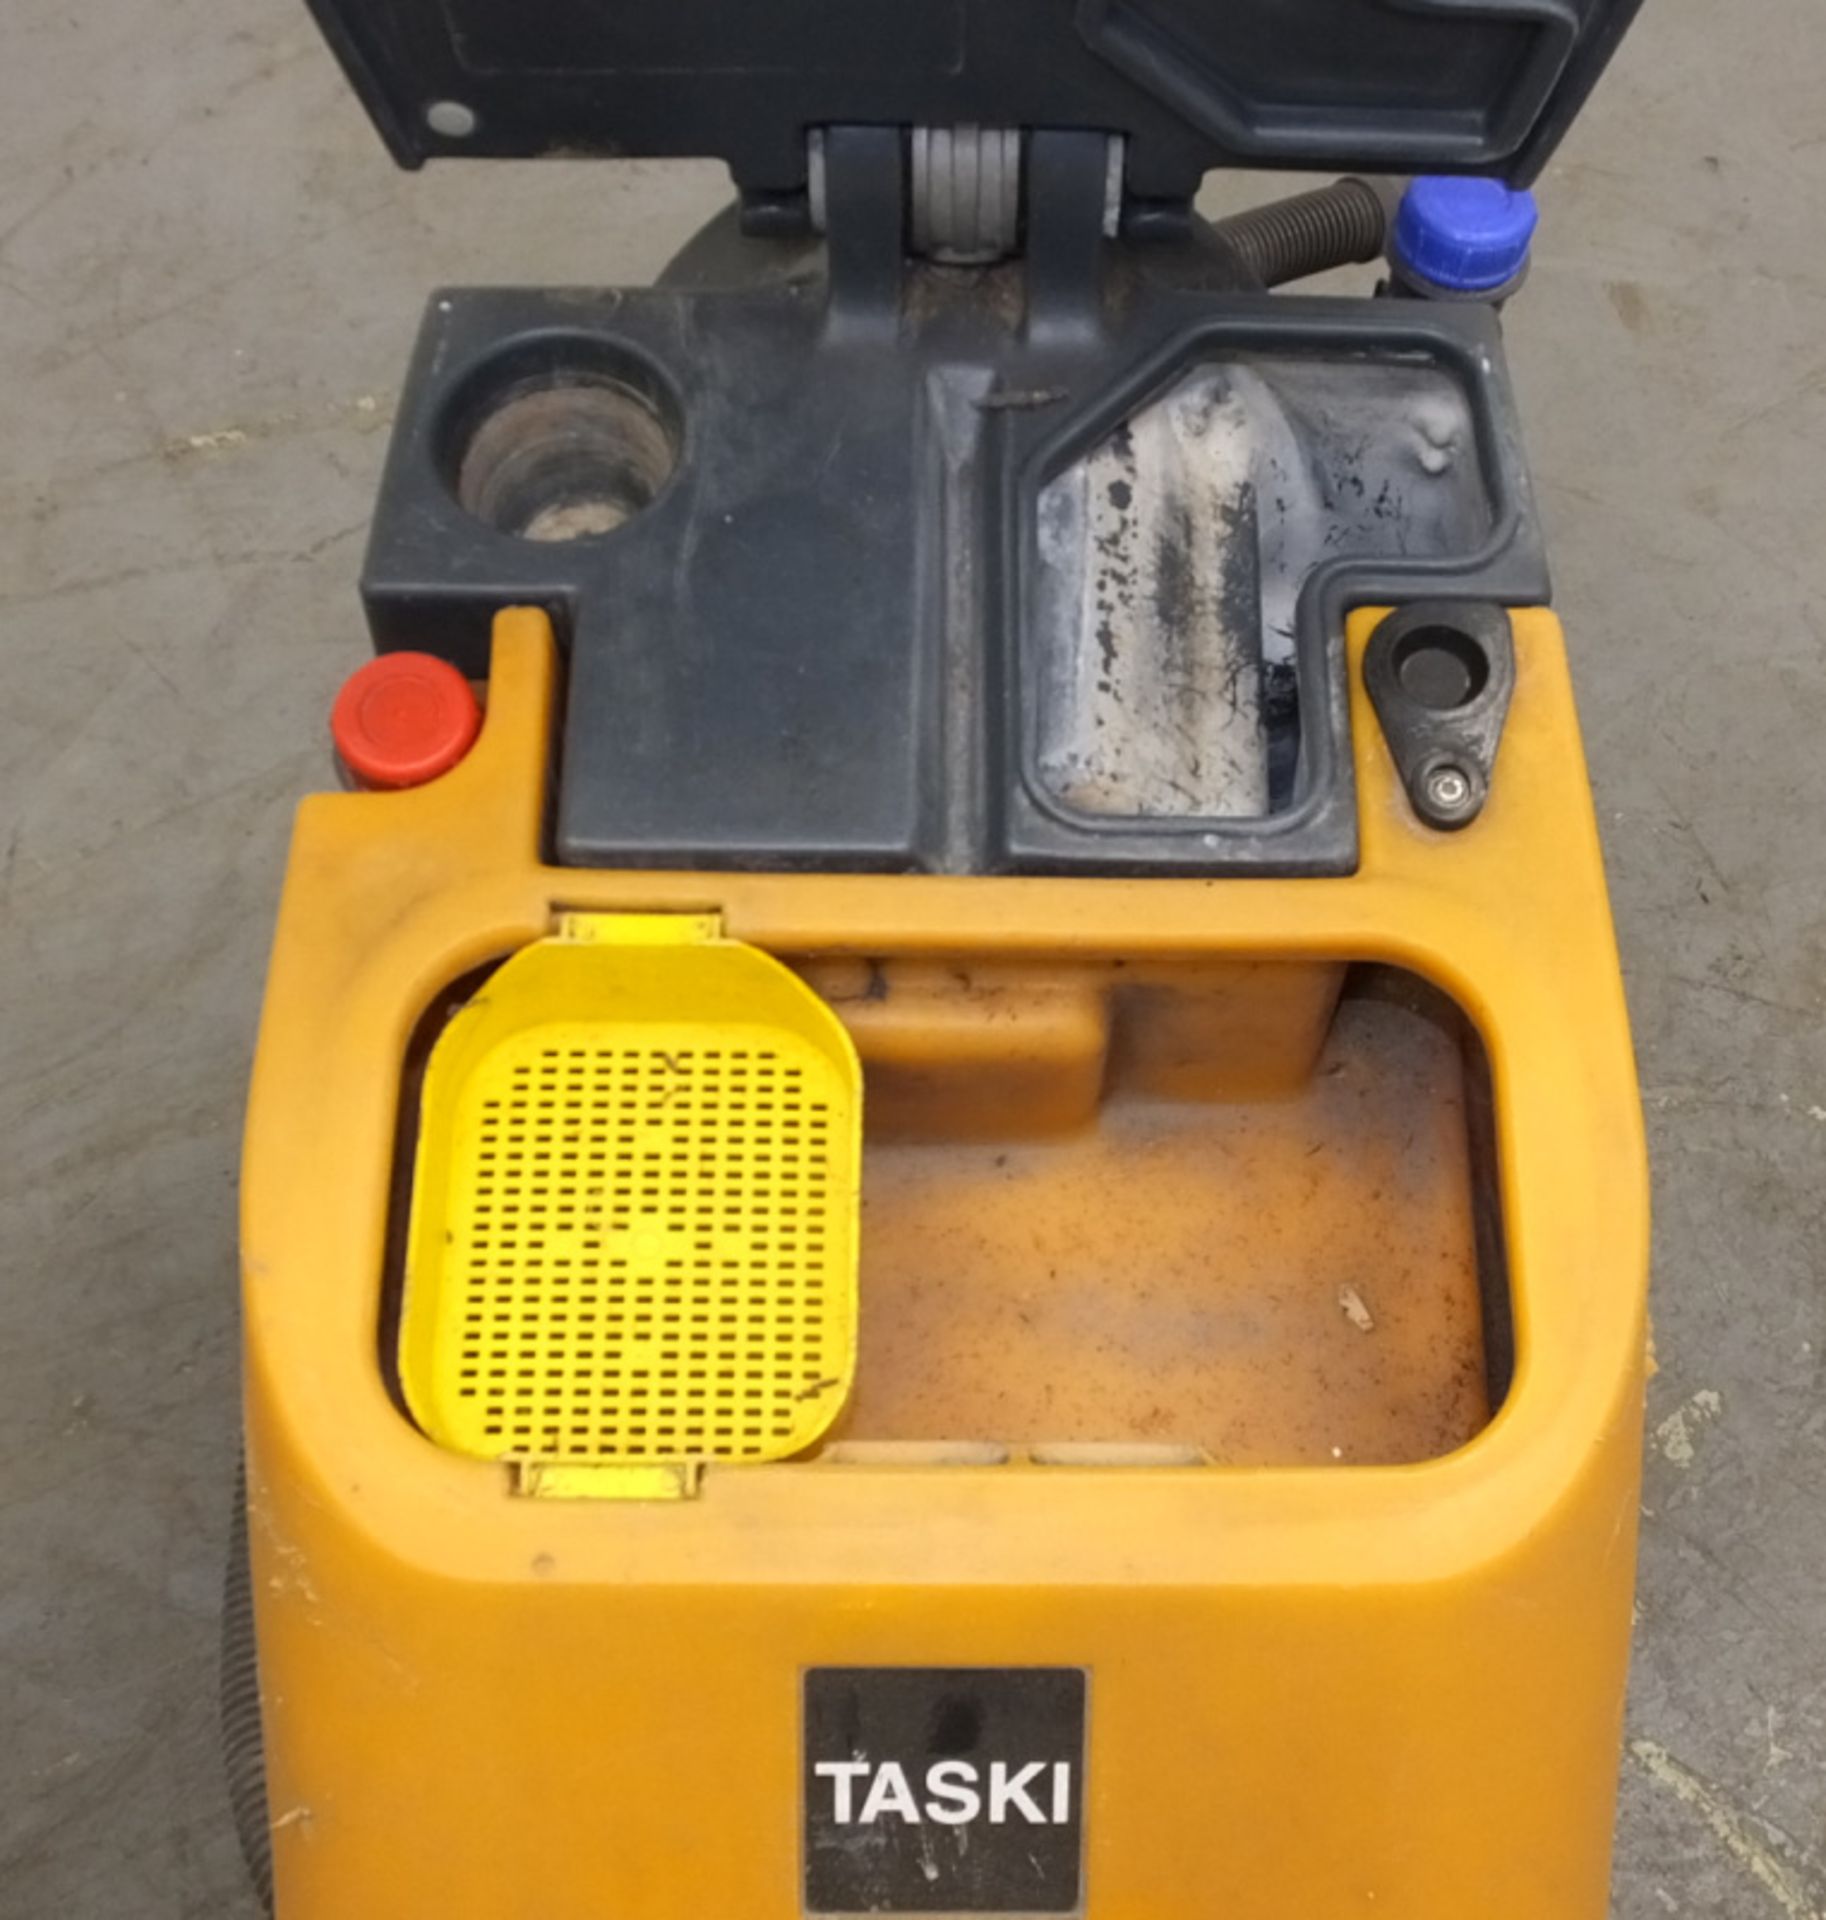 Taski Swingo 450B Scrubber Dryer CO450.0 - doesn't power up - Image 8 of 9